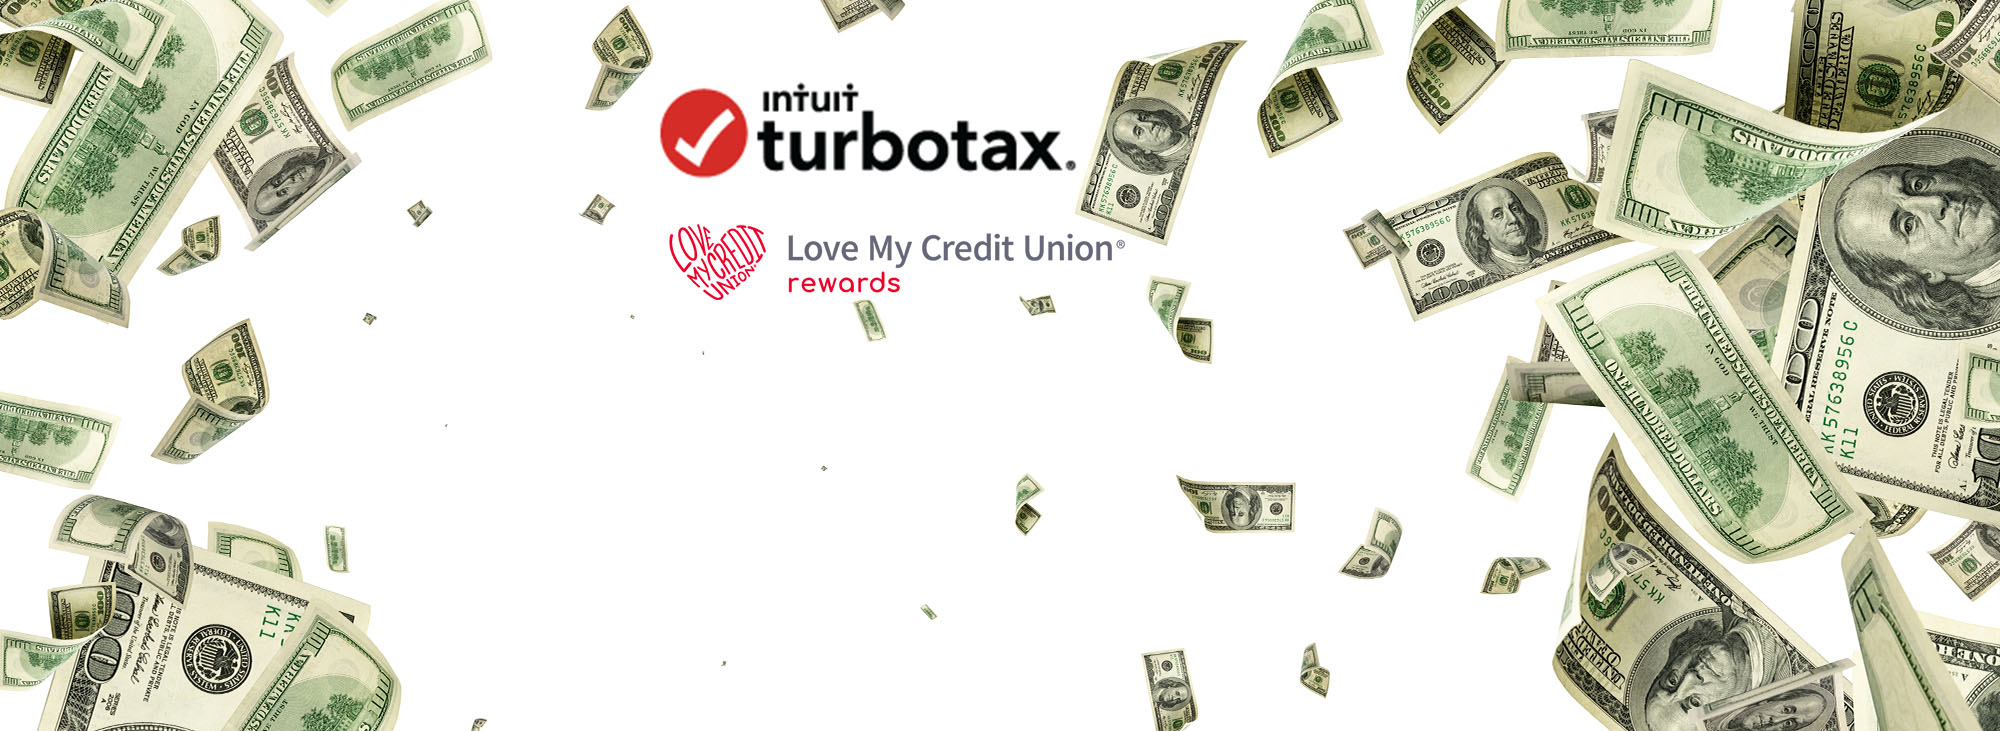 turbo tax banner 20 centered logos | DEXSTA Federal Credit ...